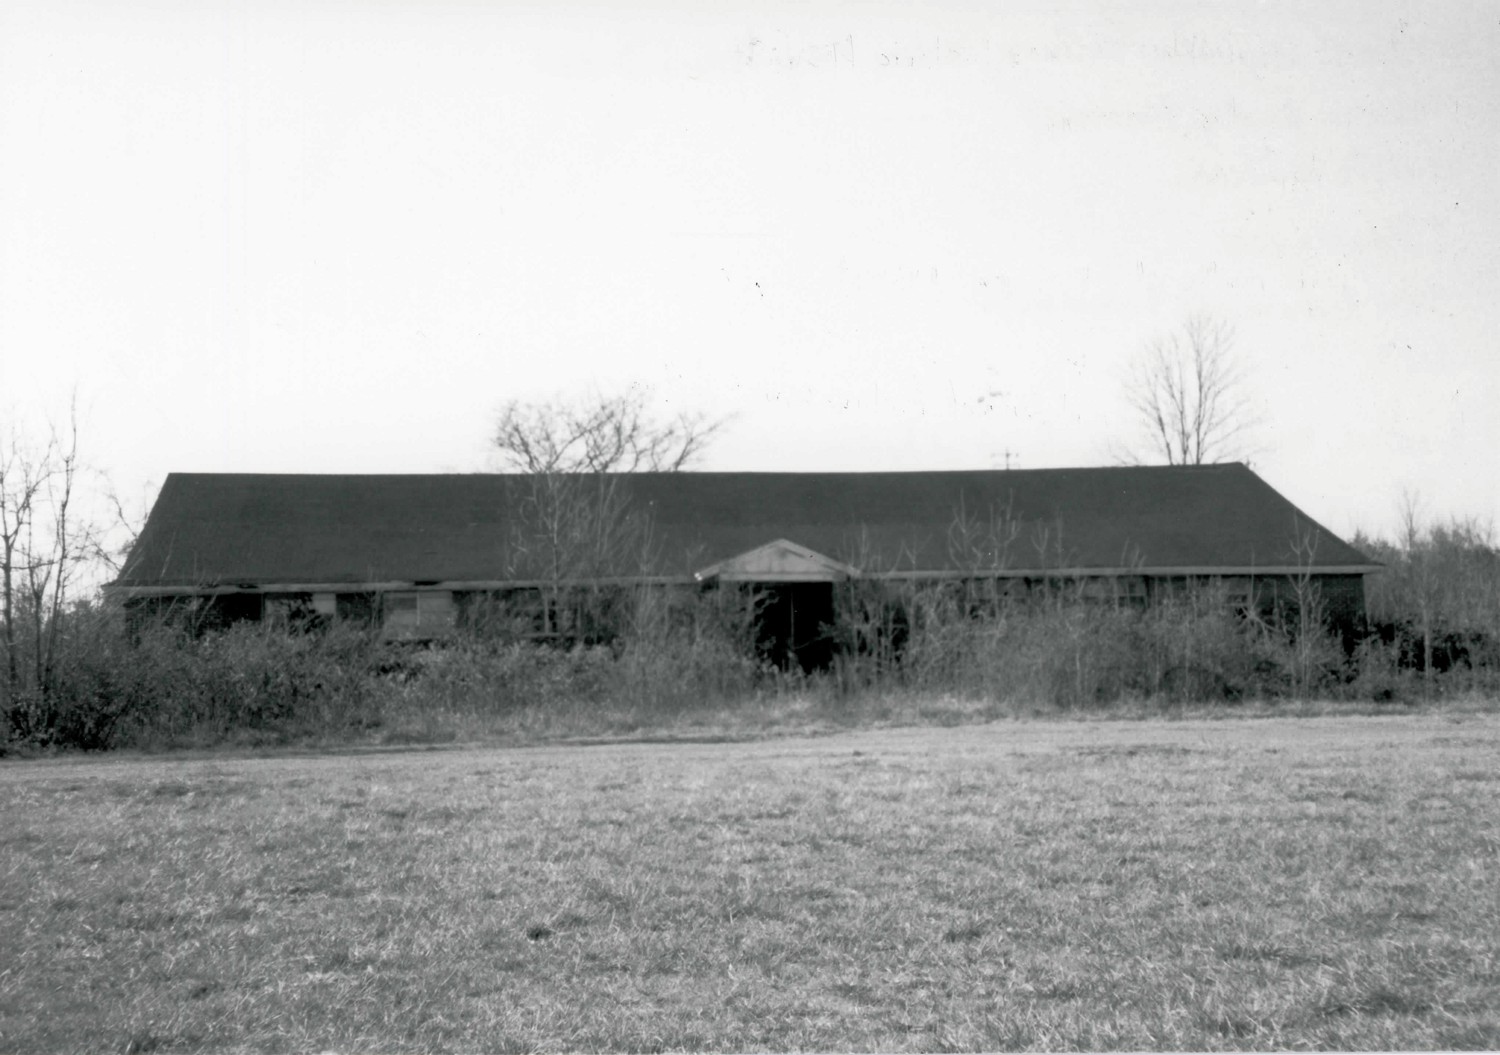 Okolona College - Okolona Normal & Industrial School, Okolona Mississippi Vocational agriculture building looking south (2002)